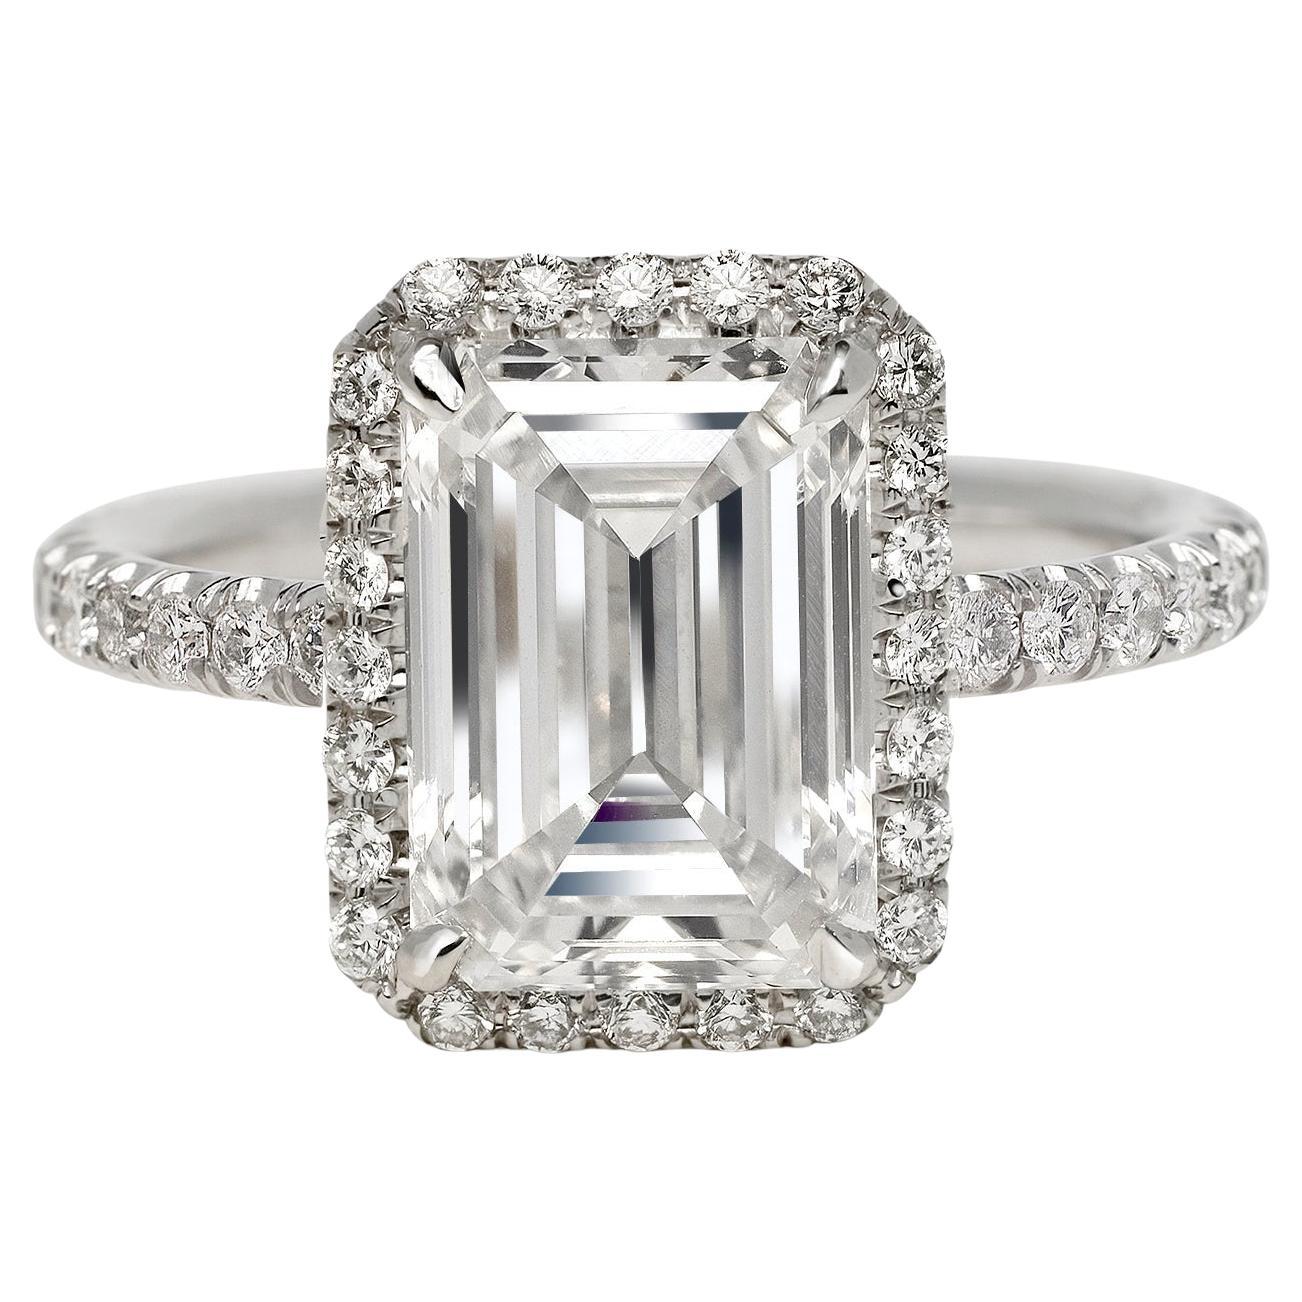 4 Carat Emerald Cut Diamond Engagement Ring GIA Certified E VVS